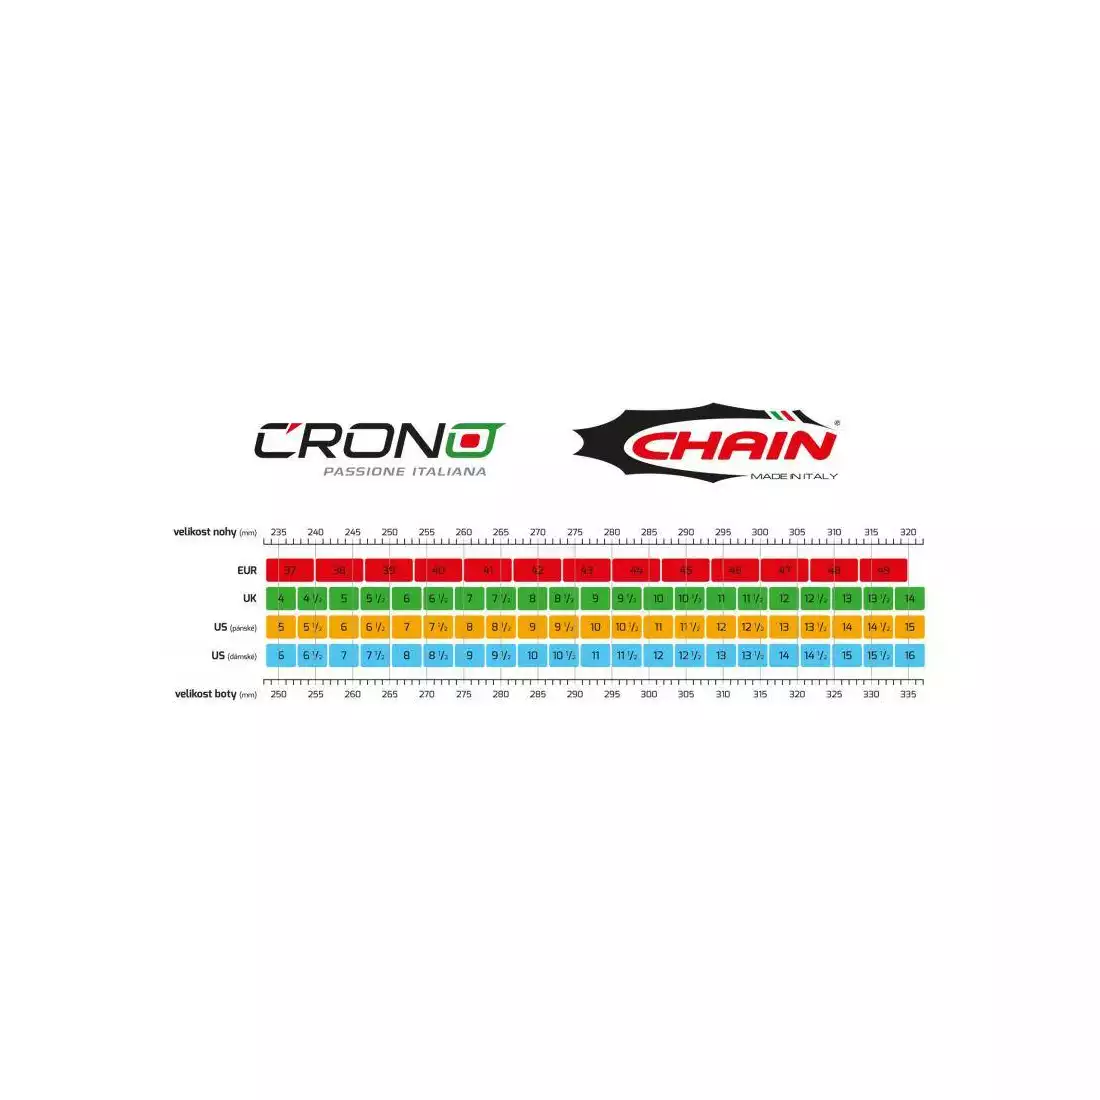 CRONO CV-1-19 Cestné cyklistické tretry, kompozitné, hnedé